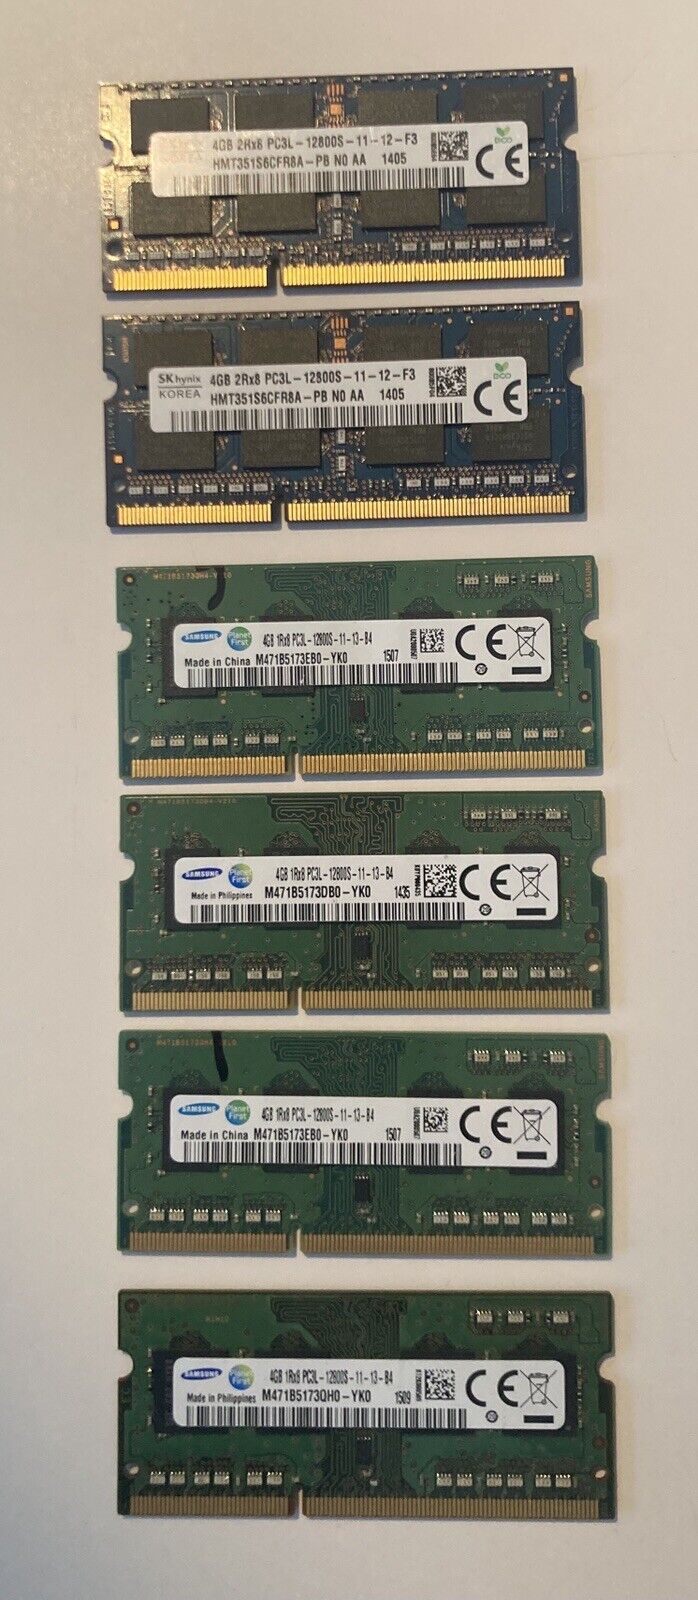 Samsung 4GB 1RX8 PC3L-12800S, SK Hynix 4GB 2Rx8 PC3L-12800S- Lot of 6 (24 GB)RAM